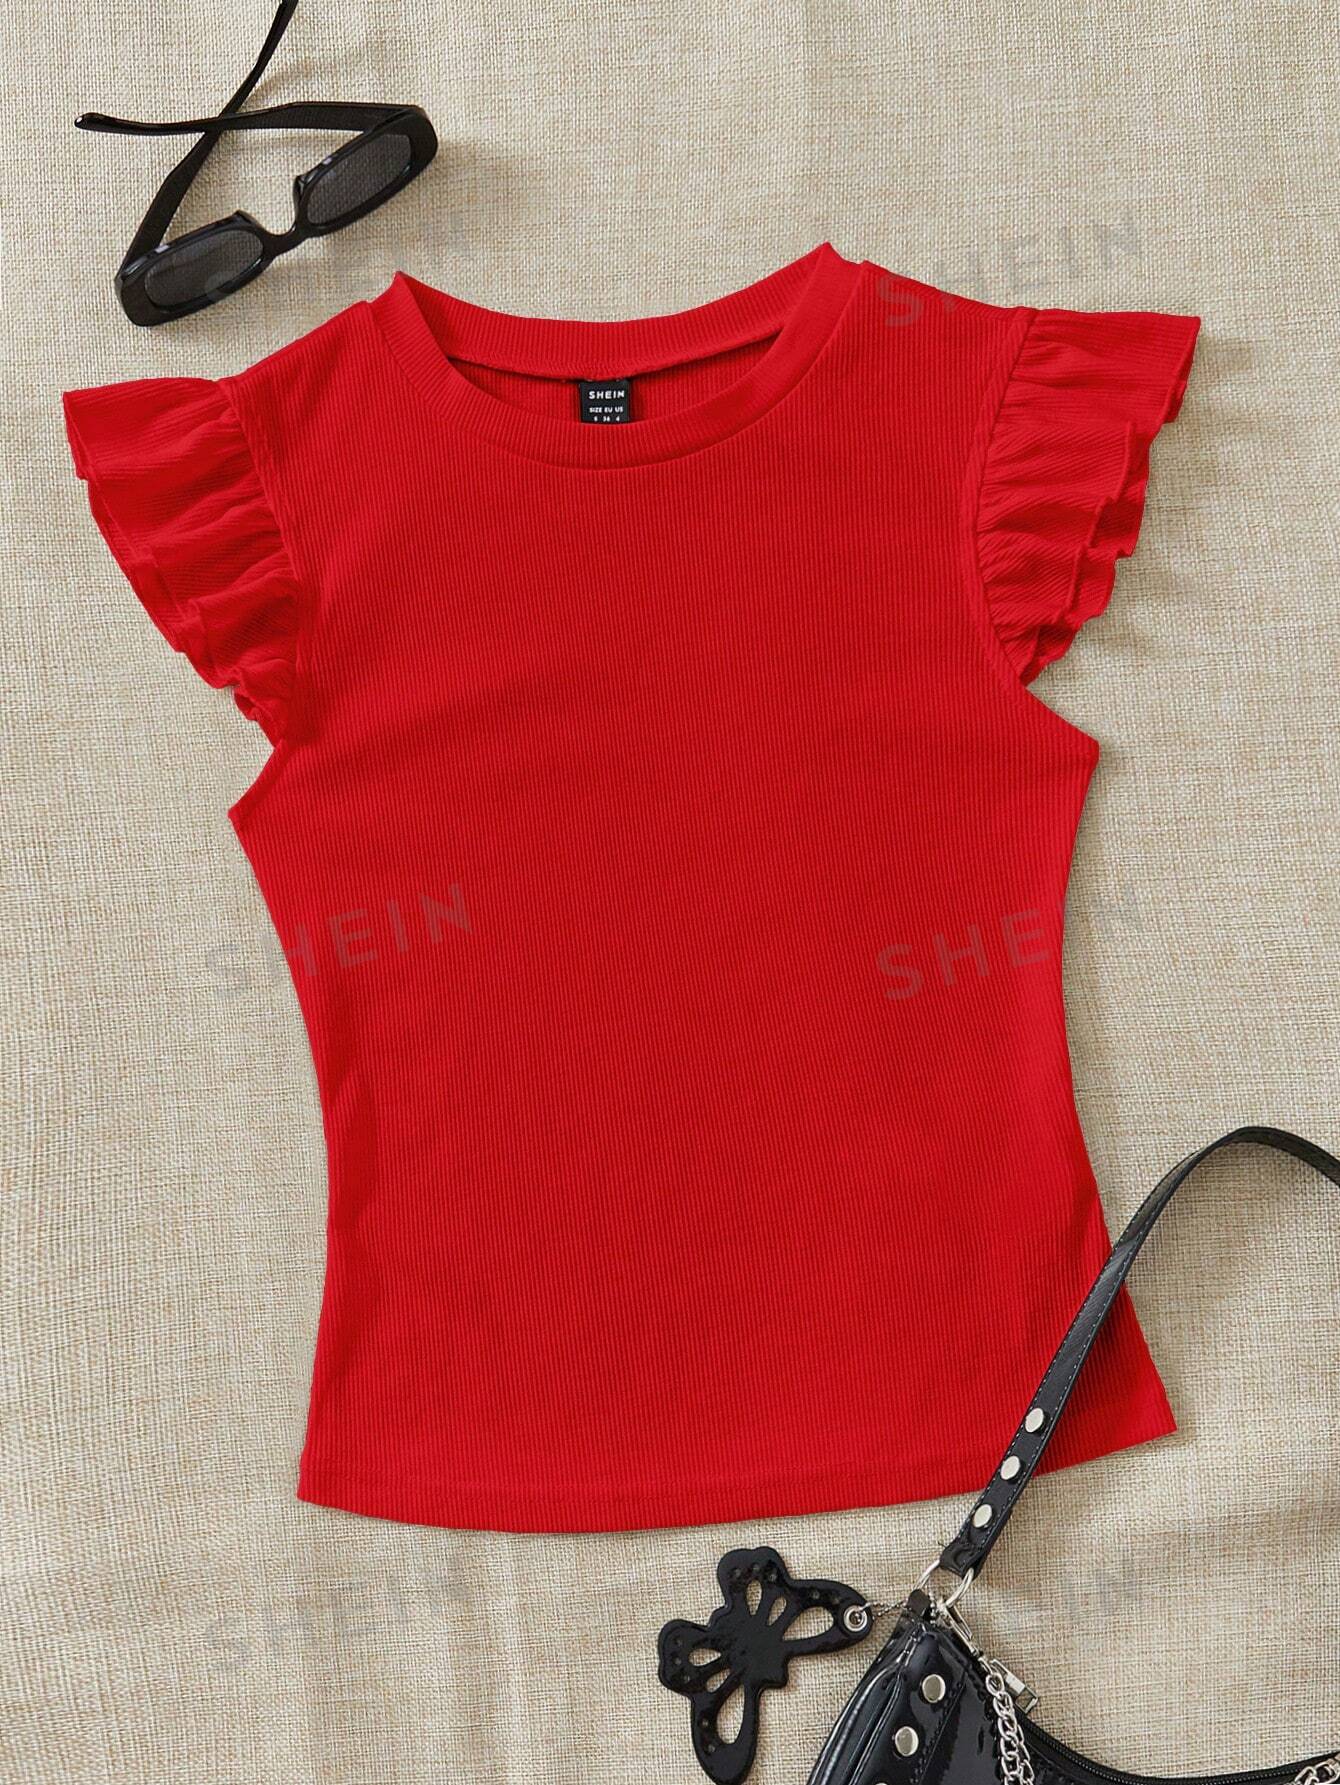 SHEIN WYWH трикотажная однотонная женская футболка с круглым вырезом и короткими рукавами, красный burgundy women strap top